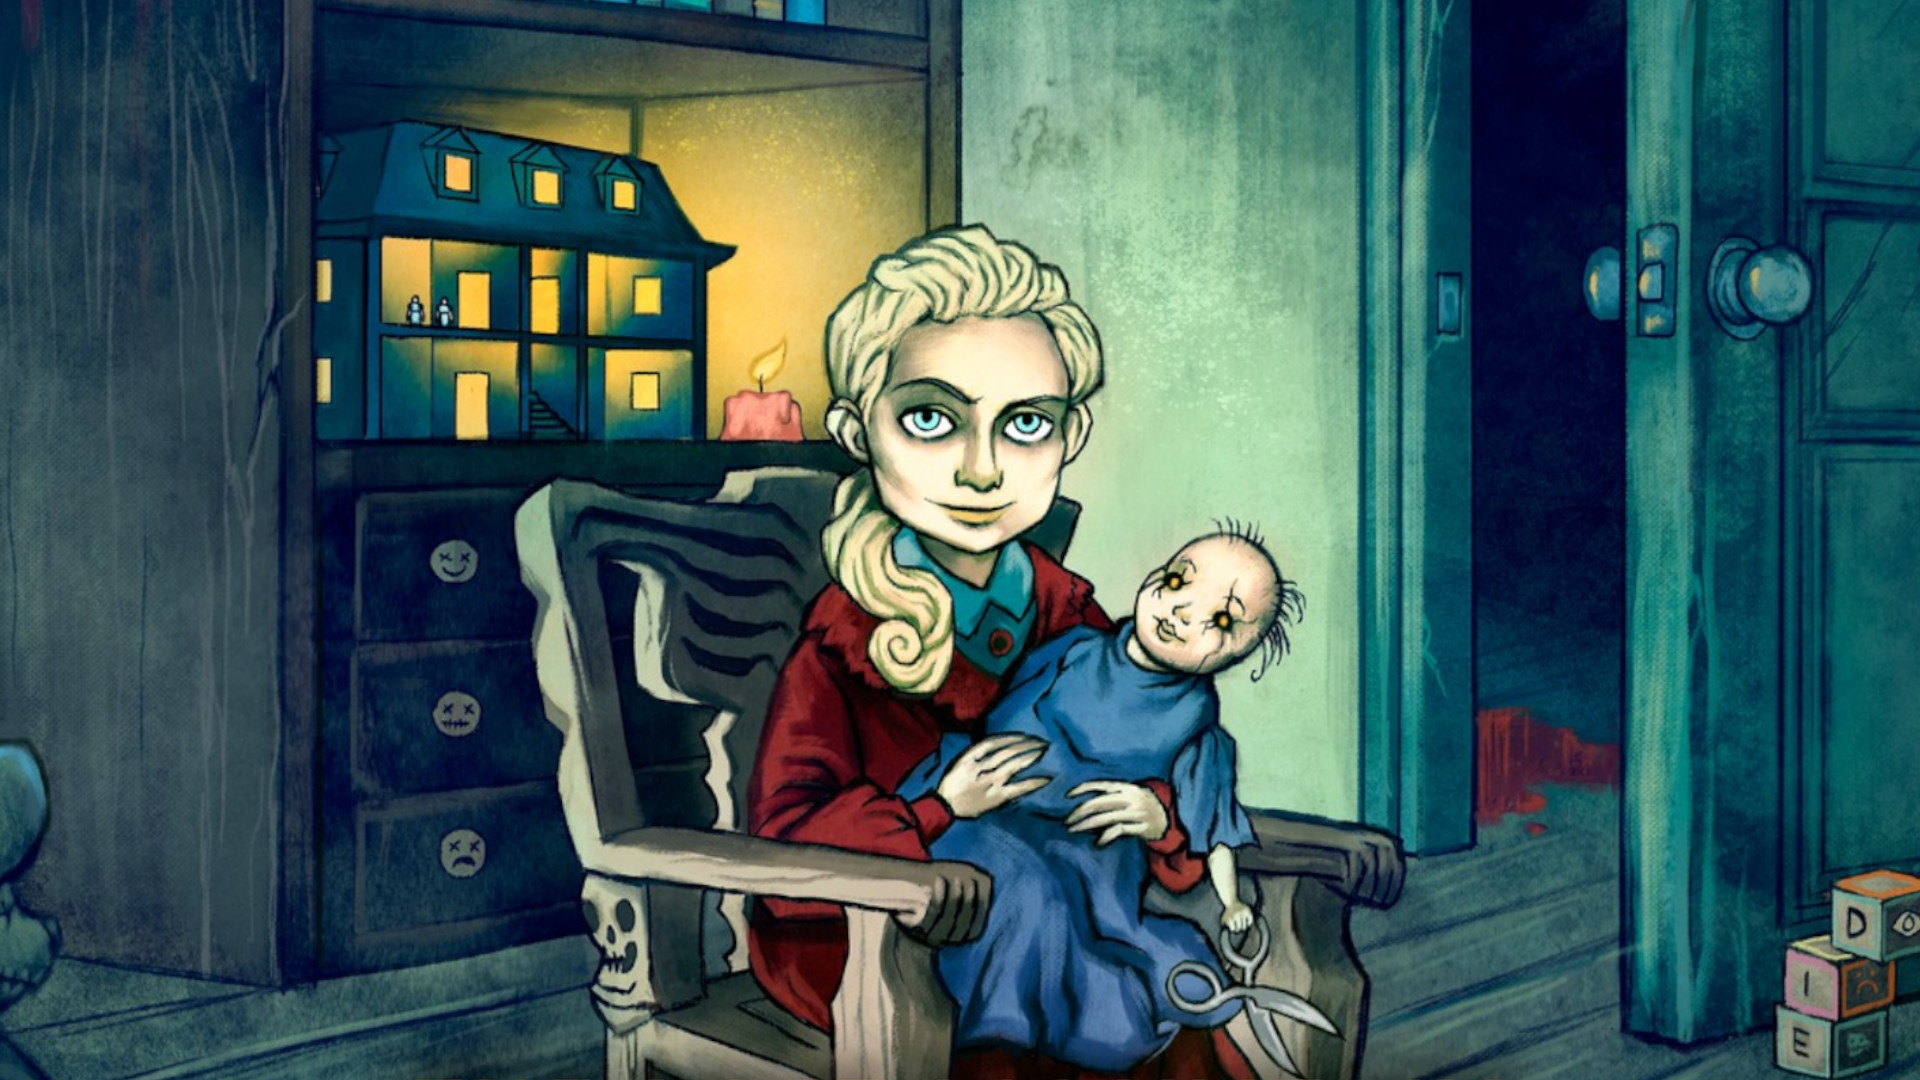 En ung, blond jente sitter i en gyngestol med en skummel dukke i hånden.